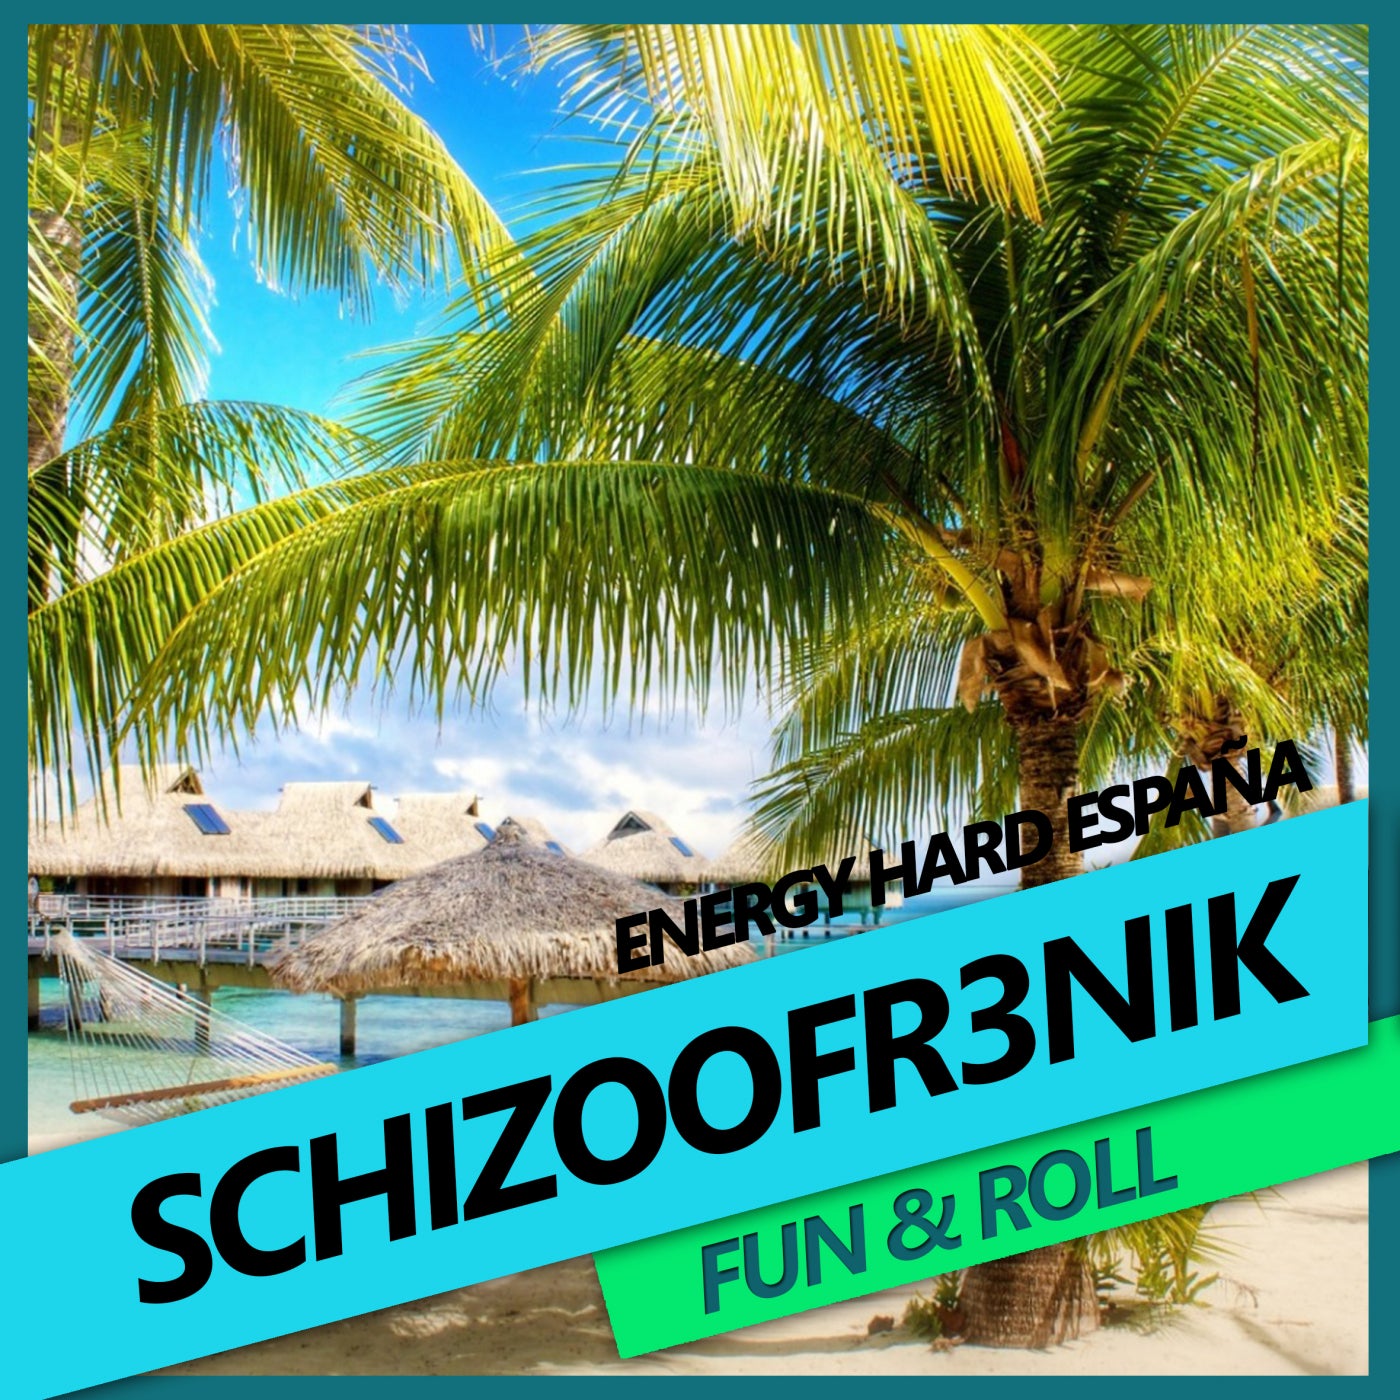 [EHE221] Schizoofr3nik - Fun & Roll 264fbf0a-9abb-49dc-857c-65cb8593fd12